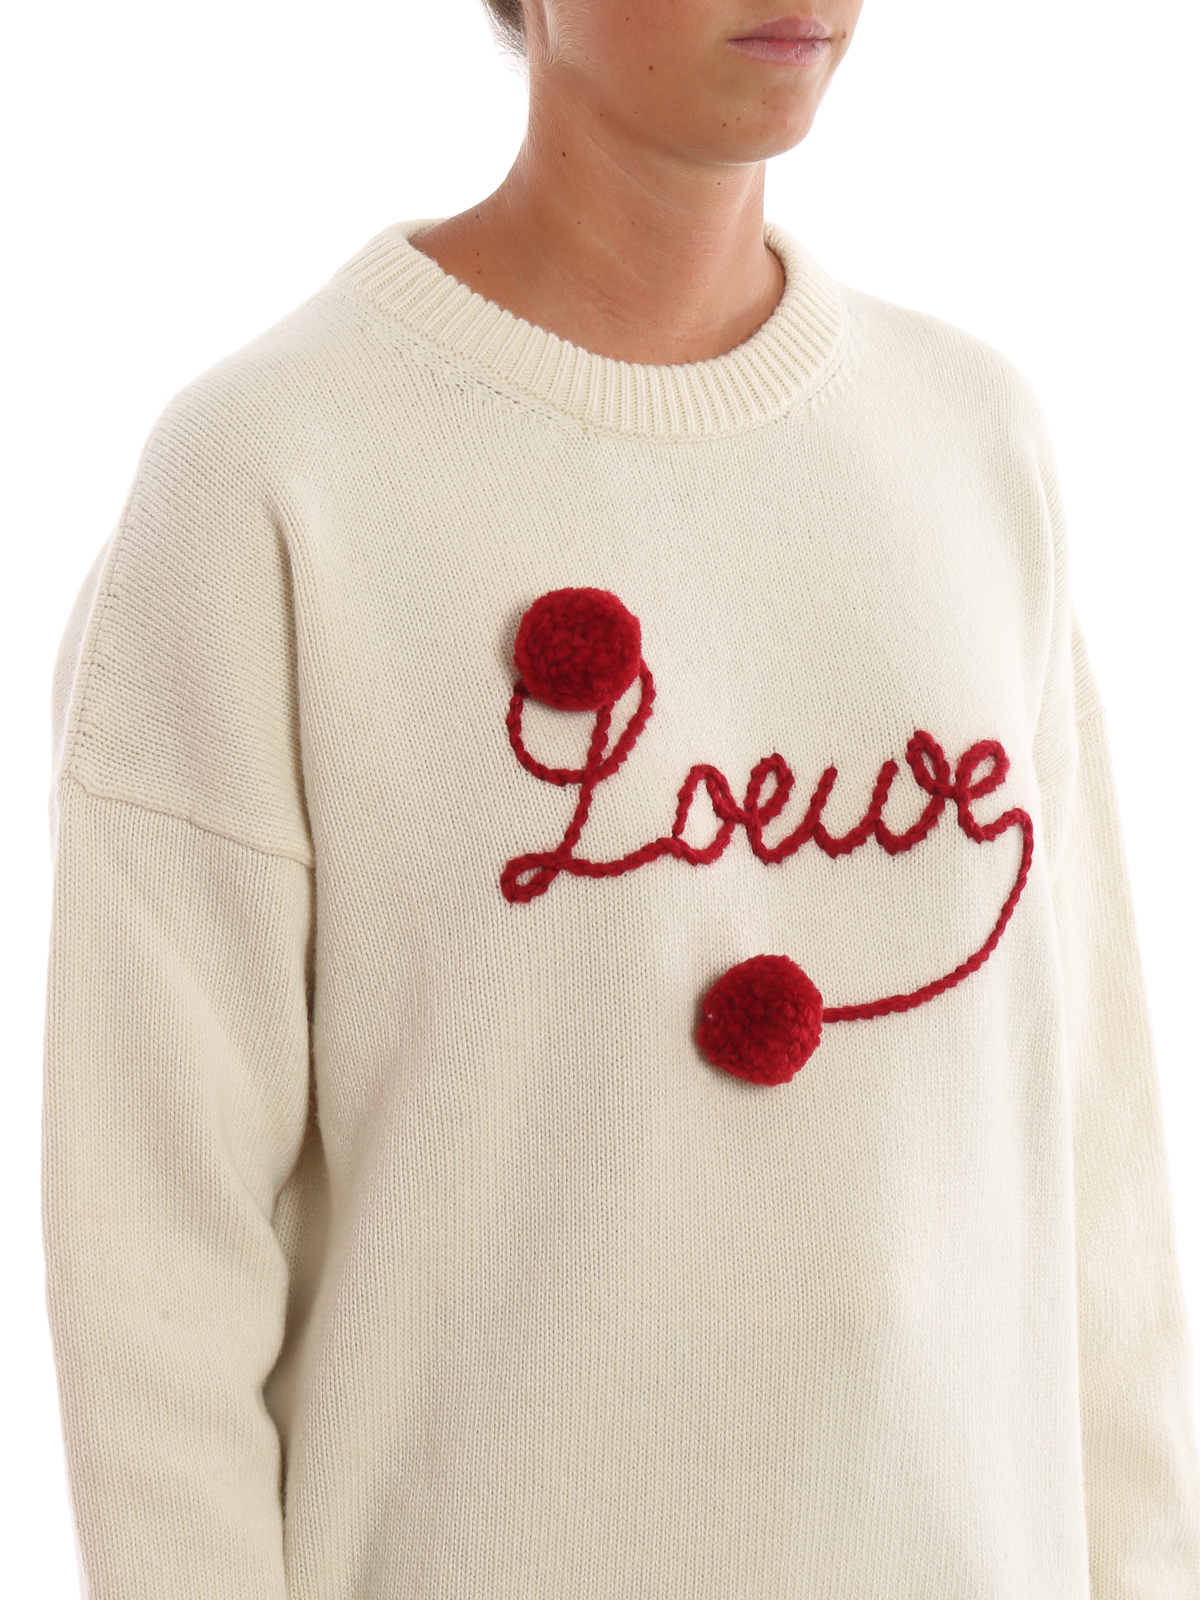 loewe sweater sale